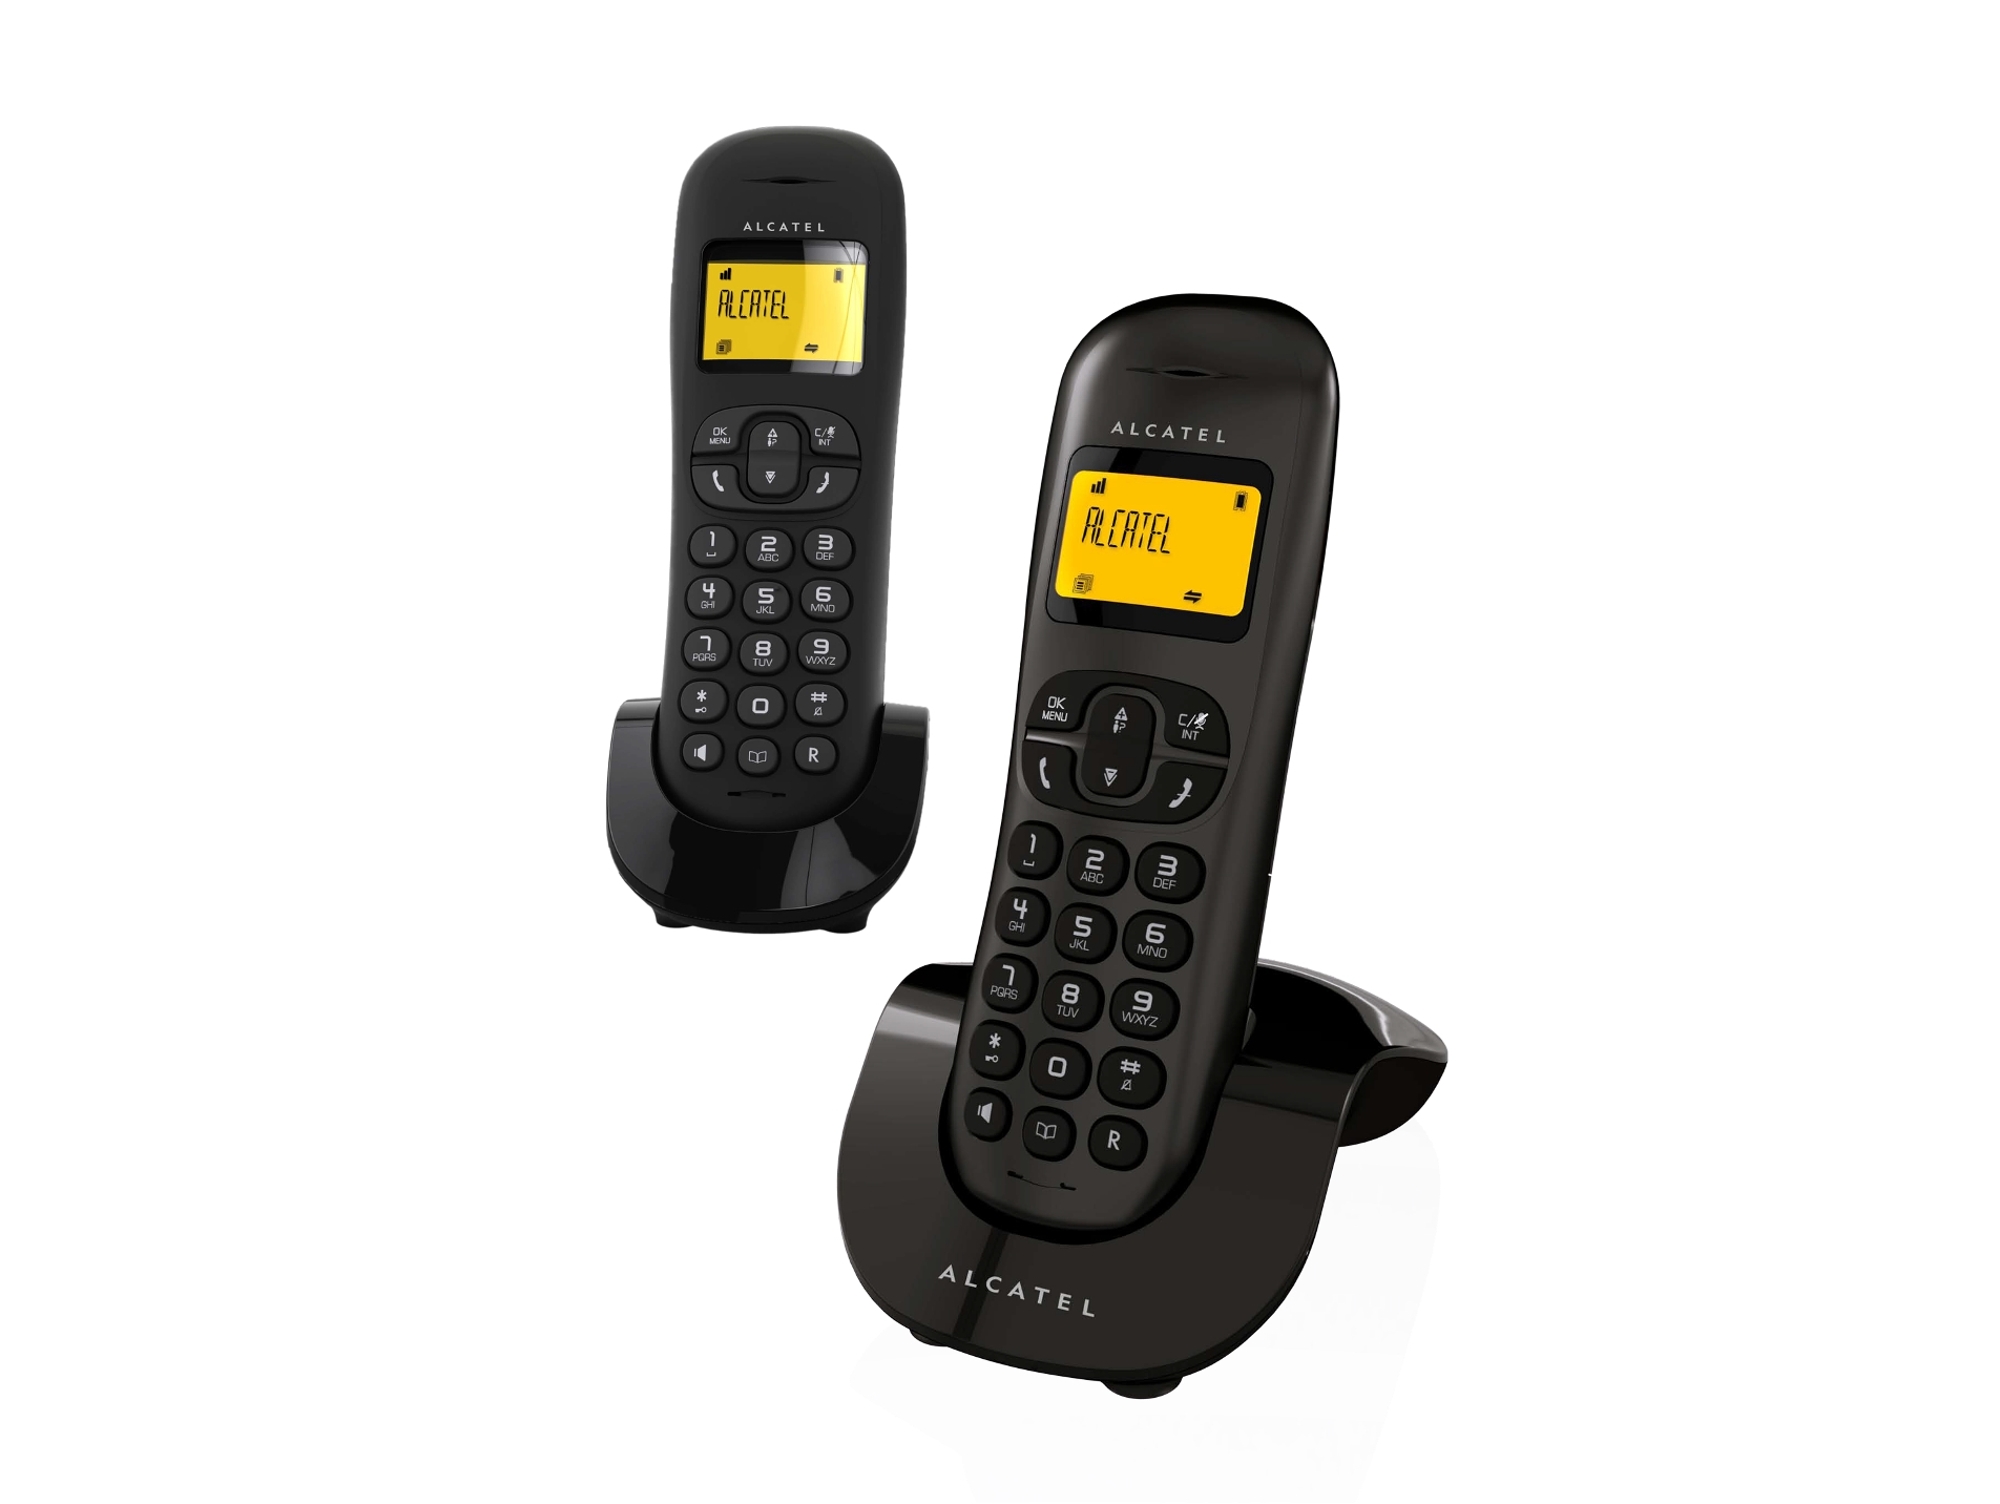 Teléfono Alcatel S250 Duo inalámbrico - color negro